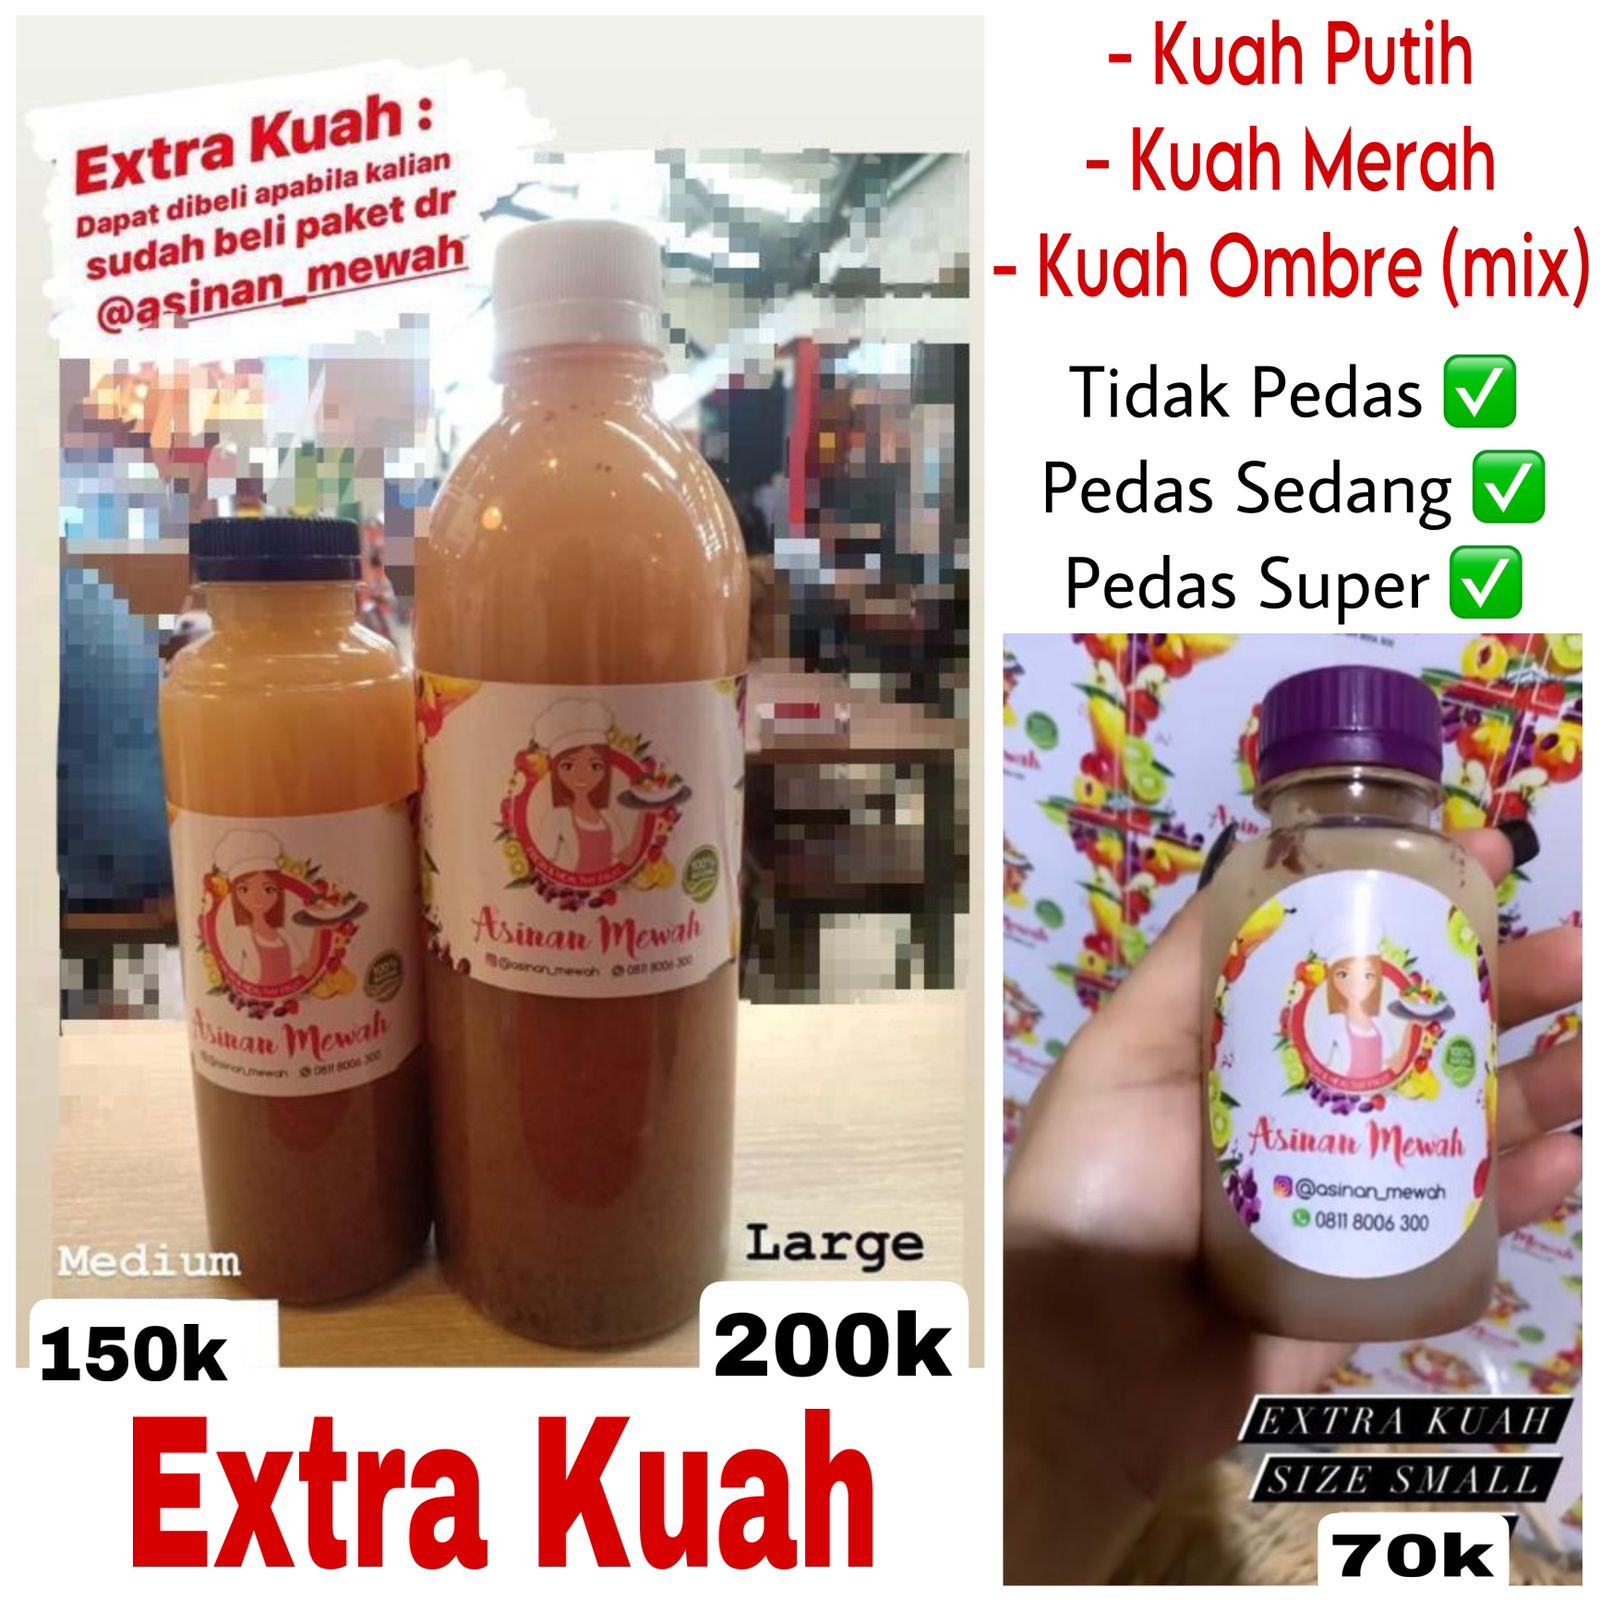 Extra Kuah